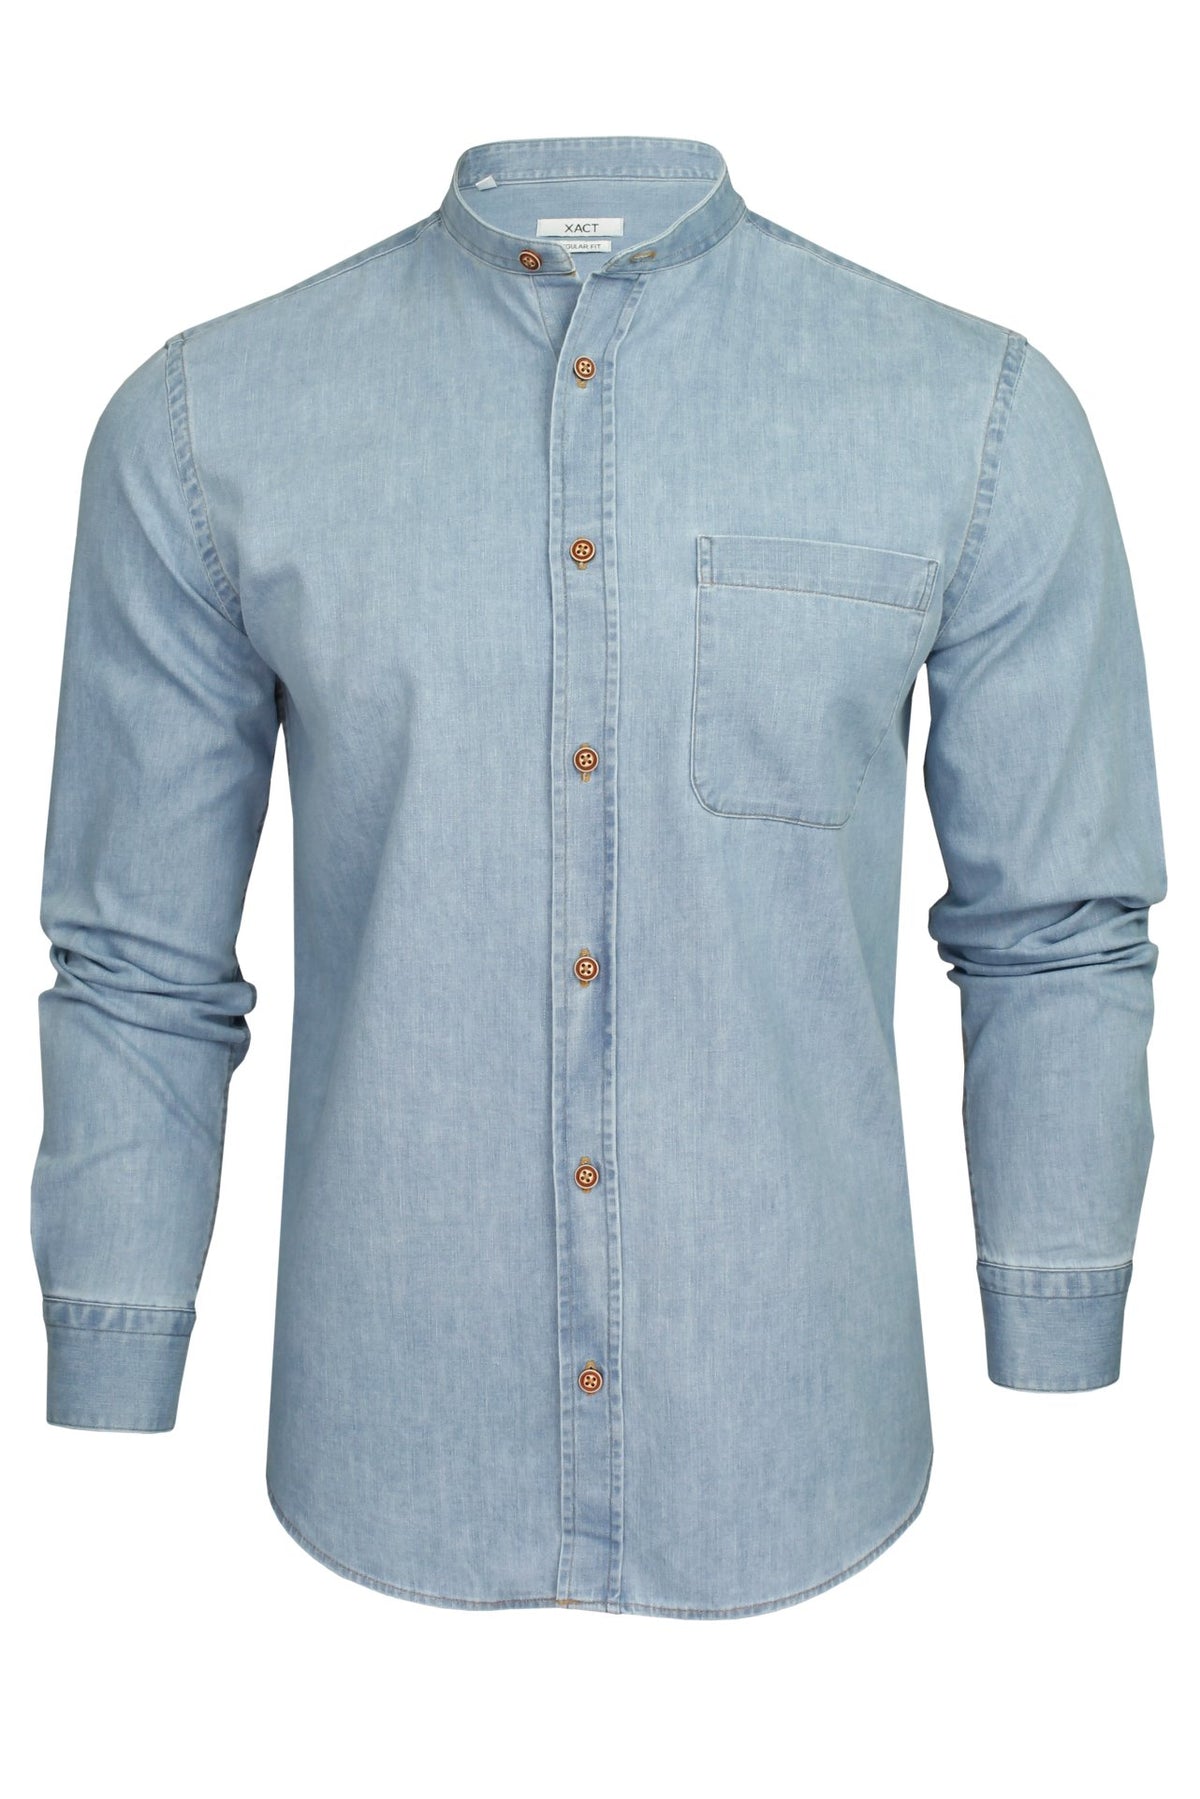 Xact Mens 6.6 oz Denim Band / Grandad Collar Shirt - Long Sleeved, 01, Xsh1173, Light Blue Denim